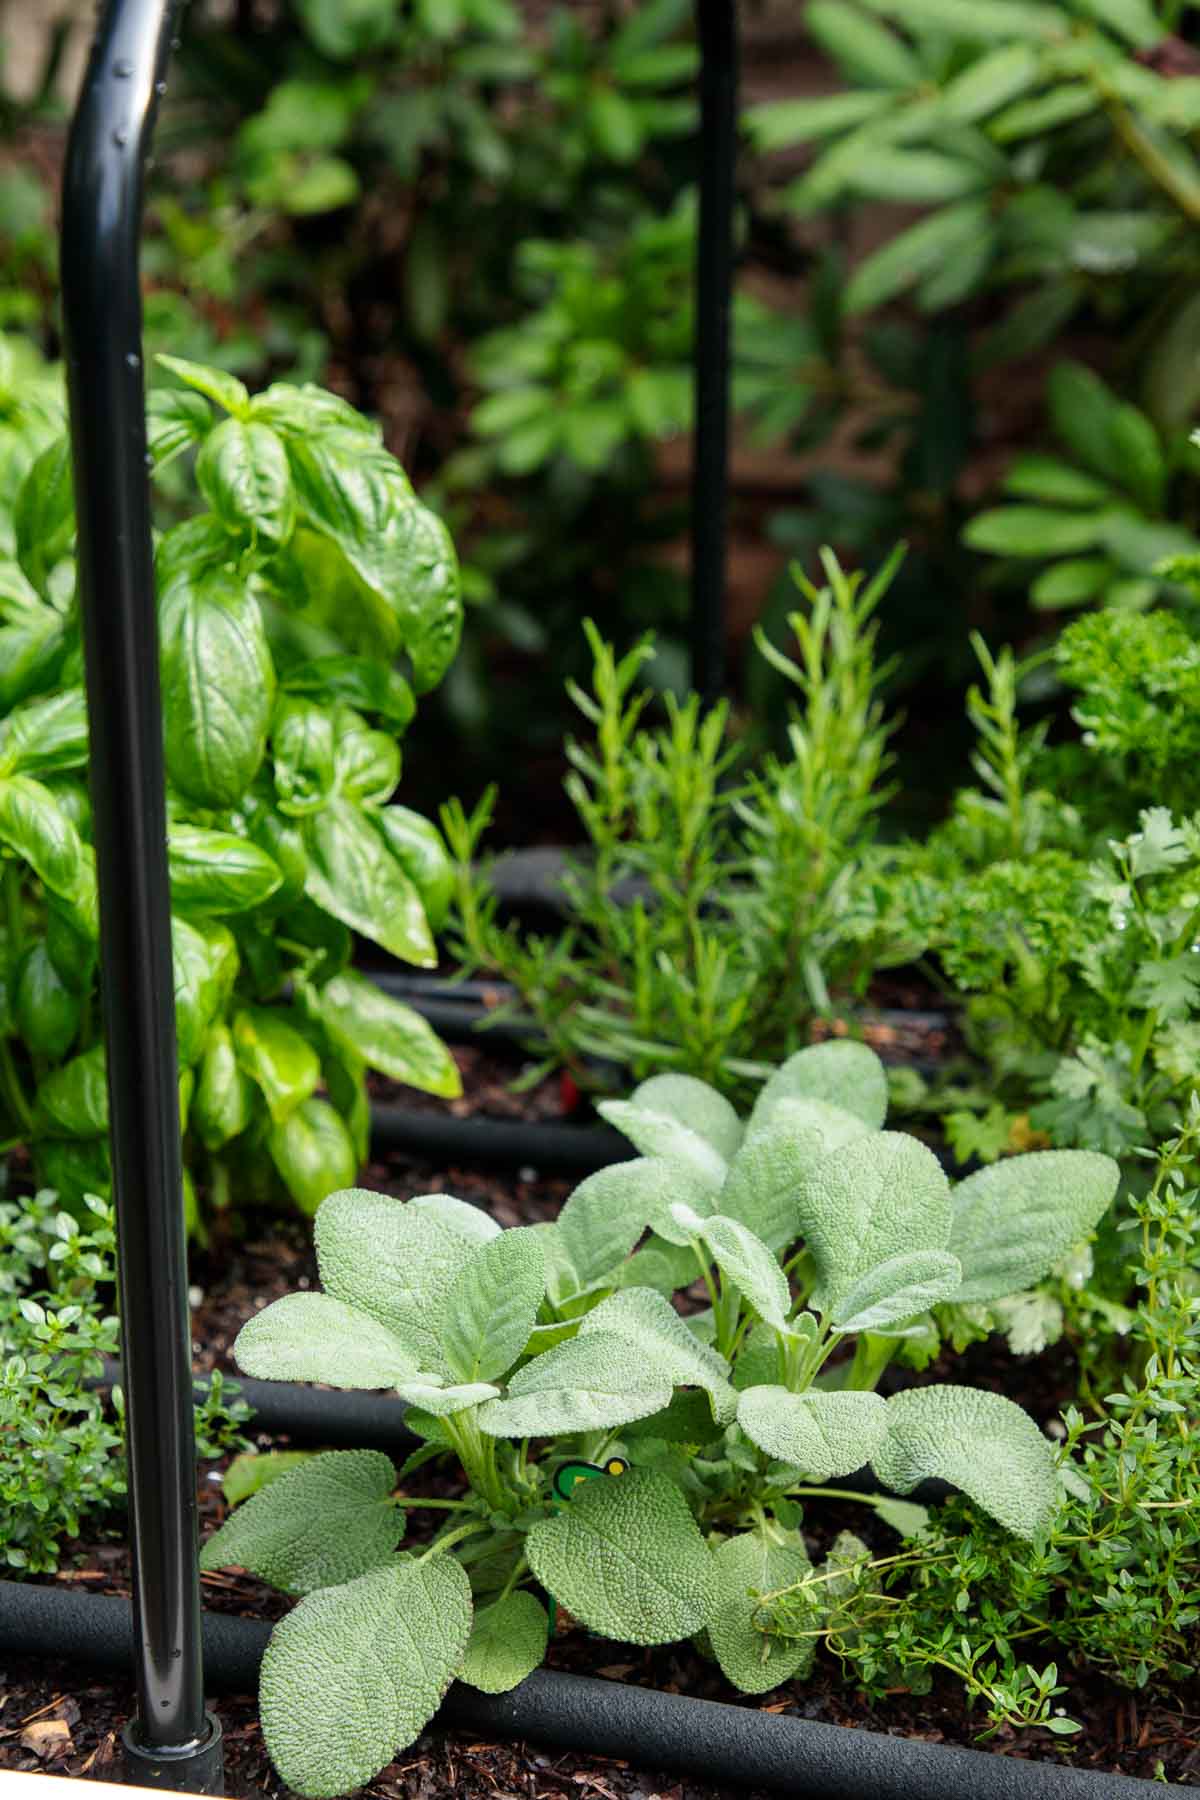 Closeup vertical photo of garden herbs growing in a Veg Trug elevated raised garden bed.